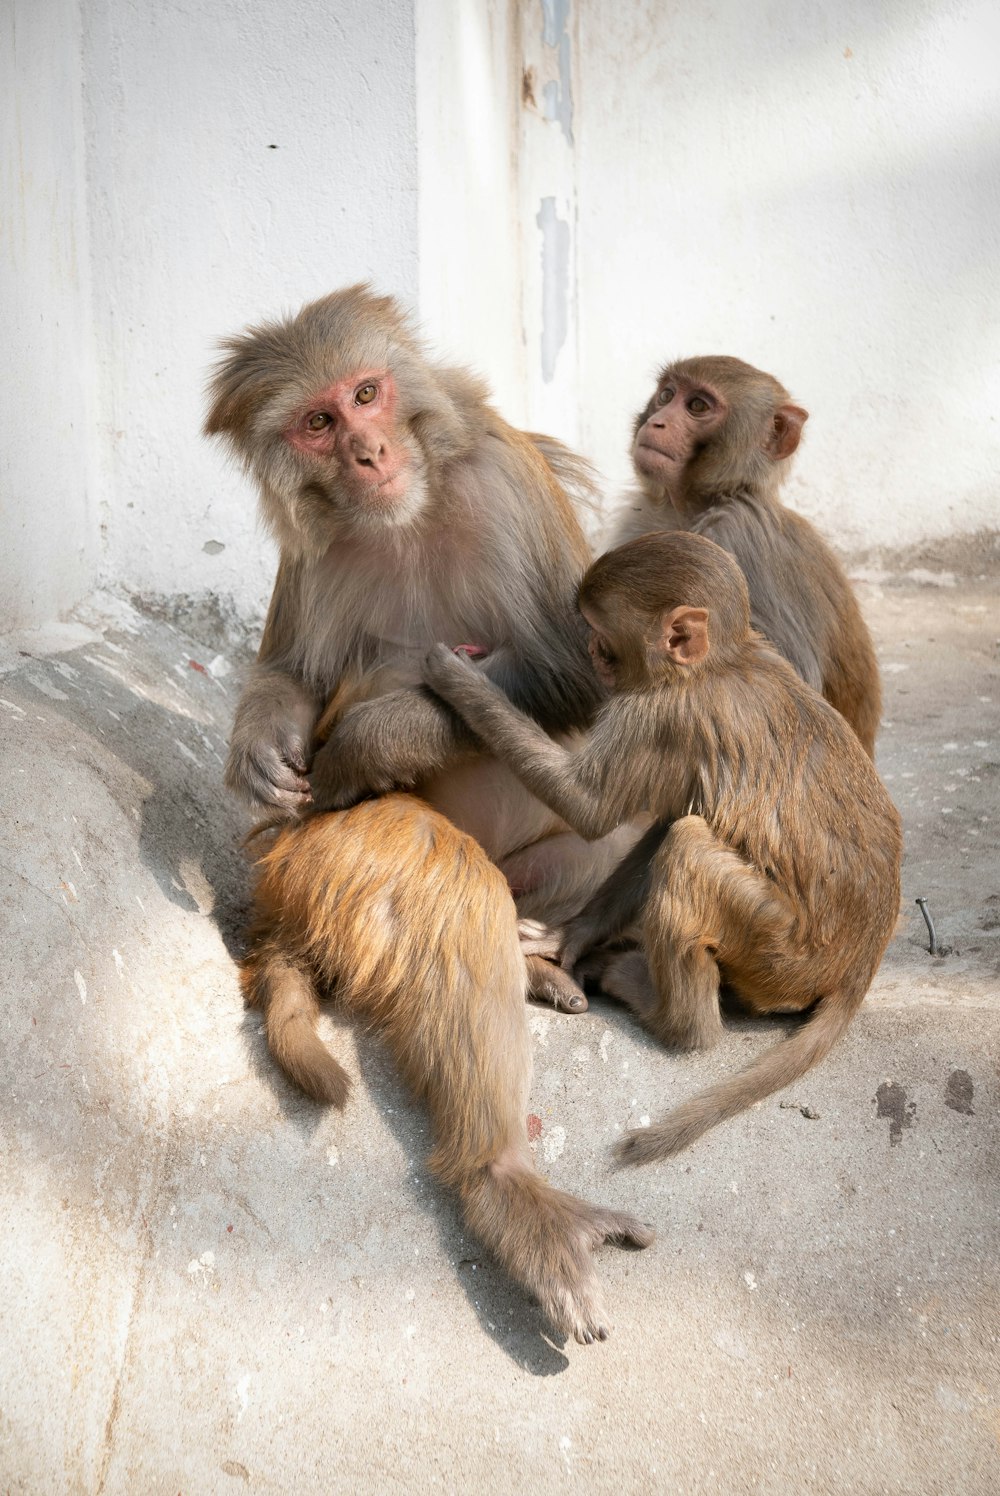 adult monkey surrounded by baby monkeys